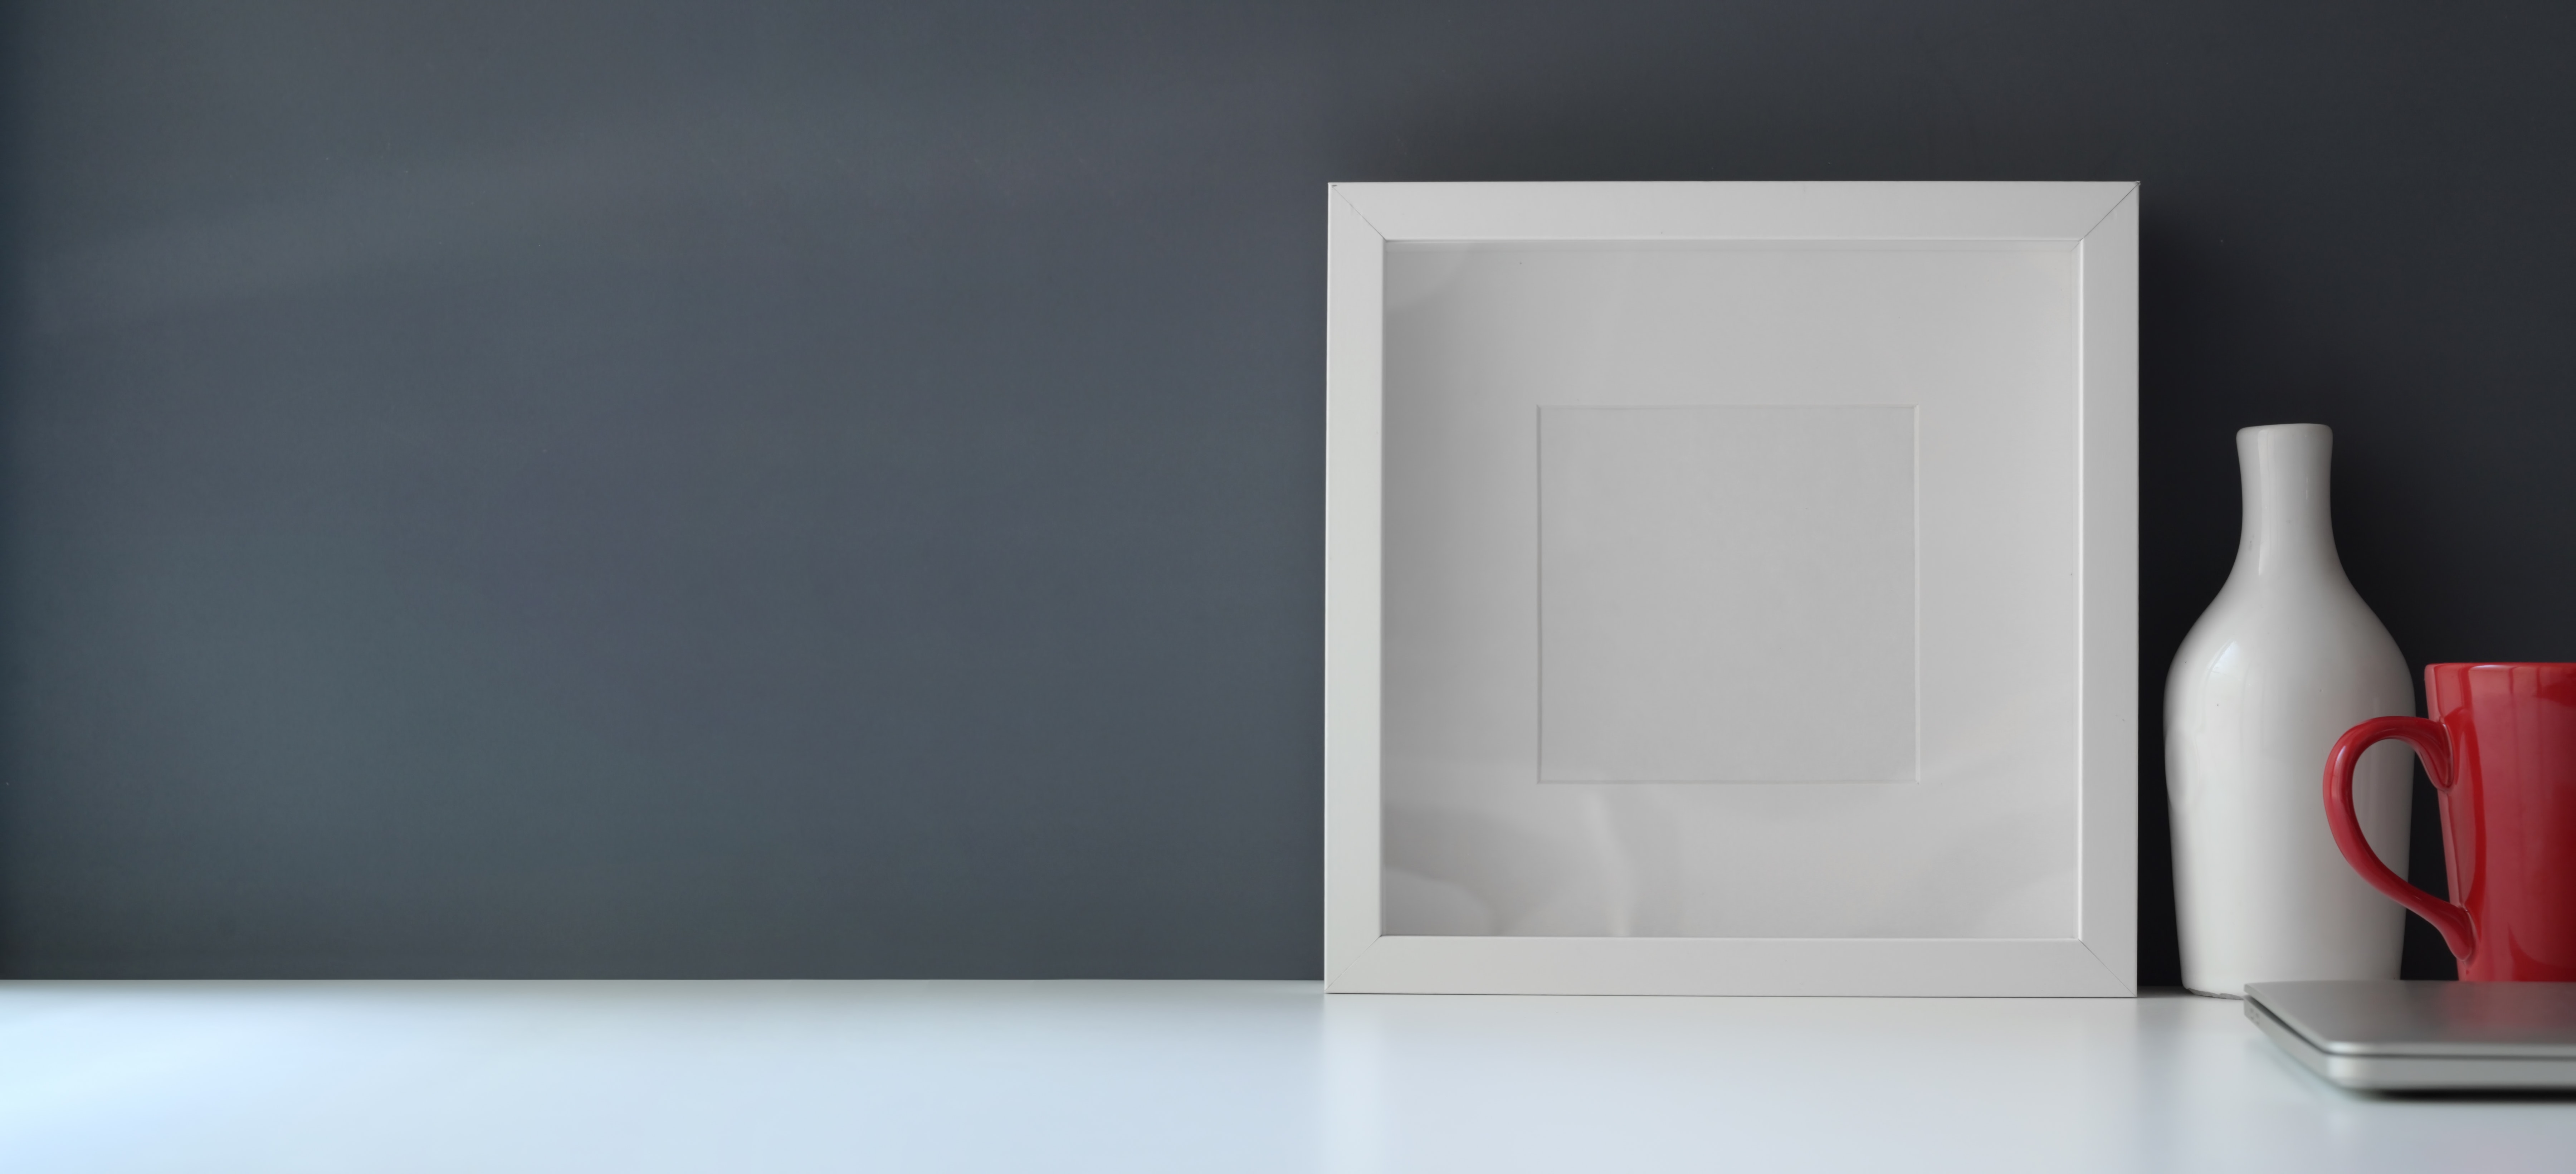 white-wooden-frame-on-white-flat-board-3774047